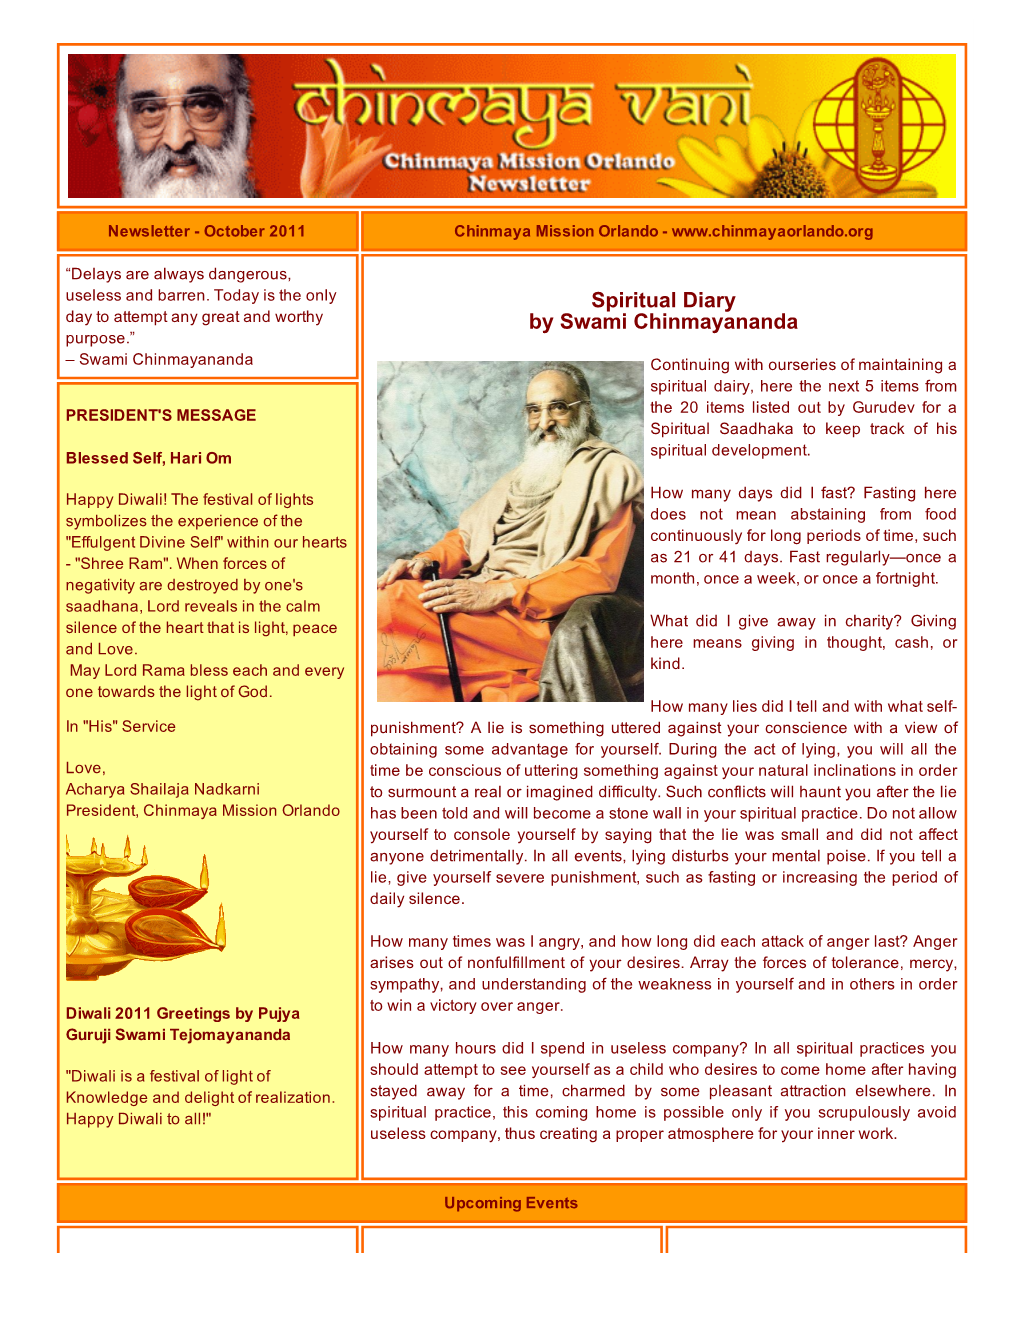 Spiritual Diary by Swami Chinmayananda